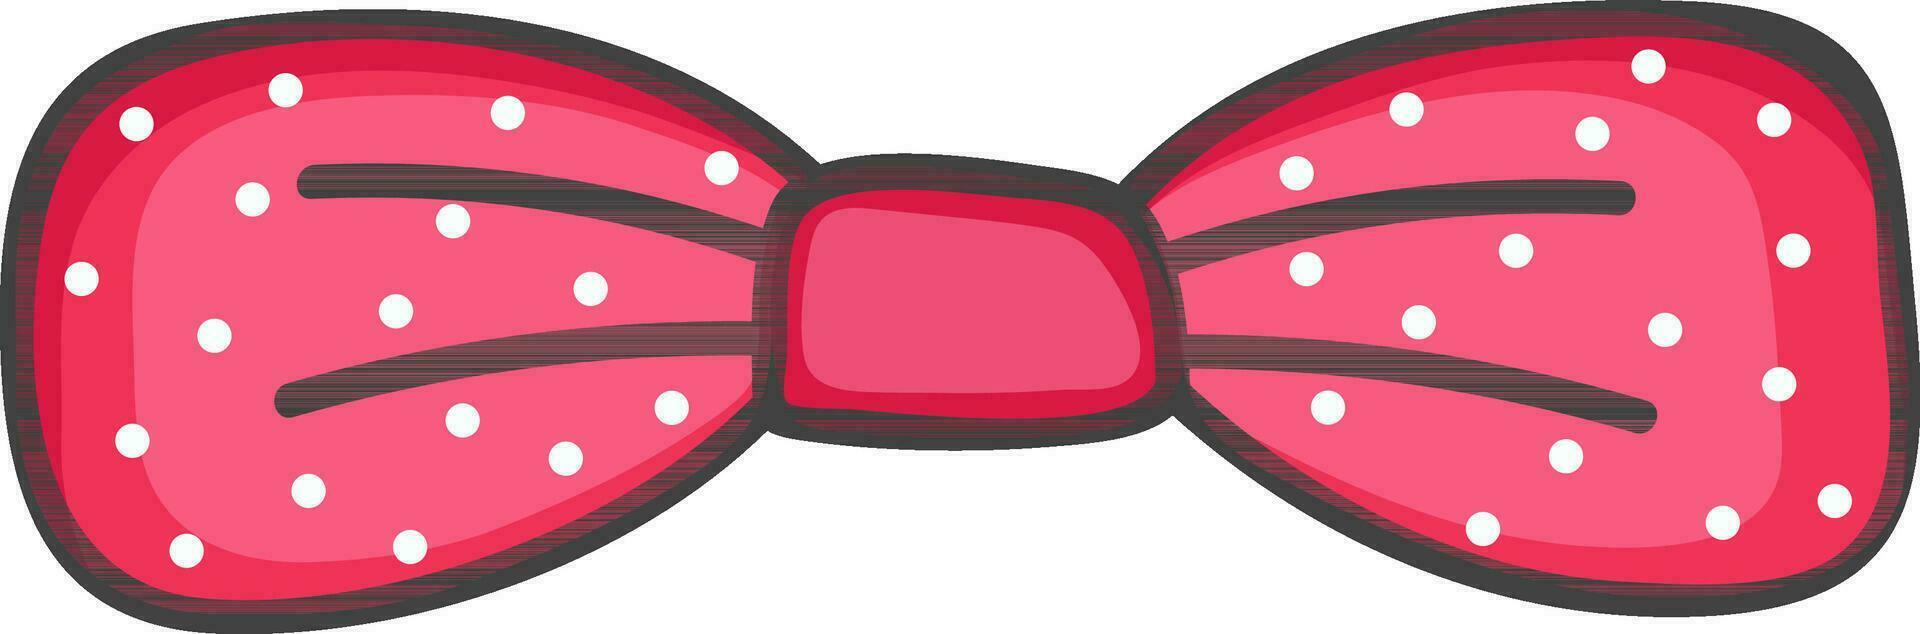 platt illustration av rosa rosett slips. vektor